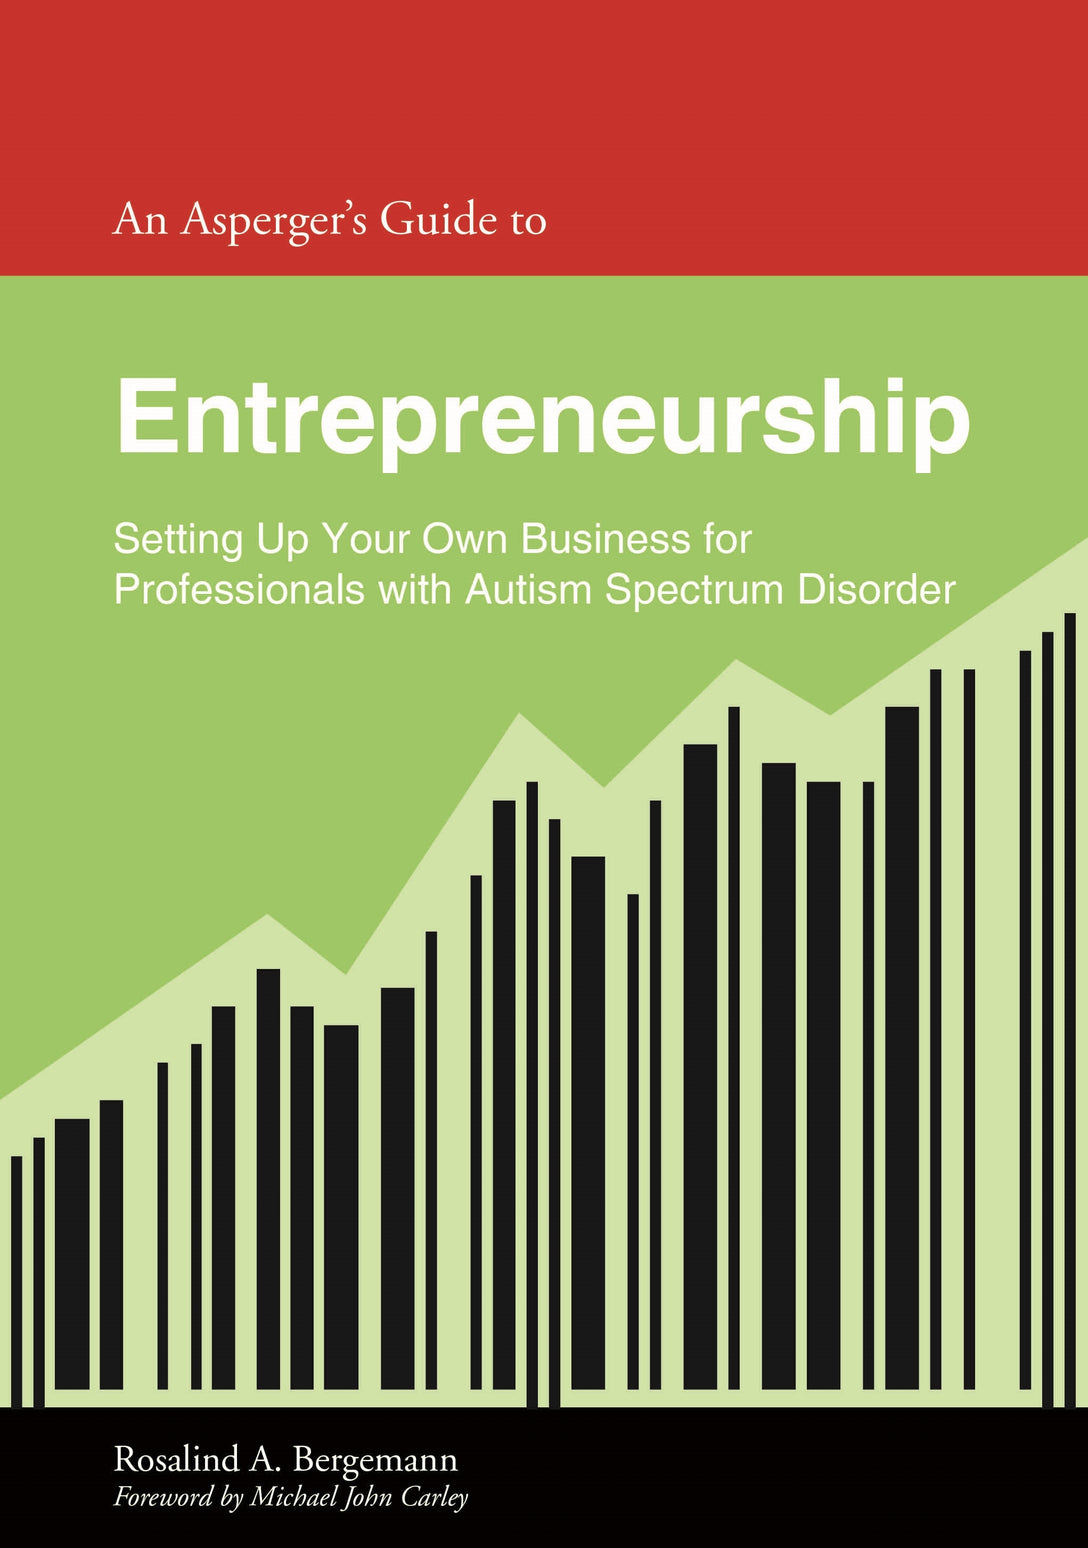 An Asperger's Guide to Entrepreneurship by Michael John Carley, Rosalind Bergemann